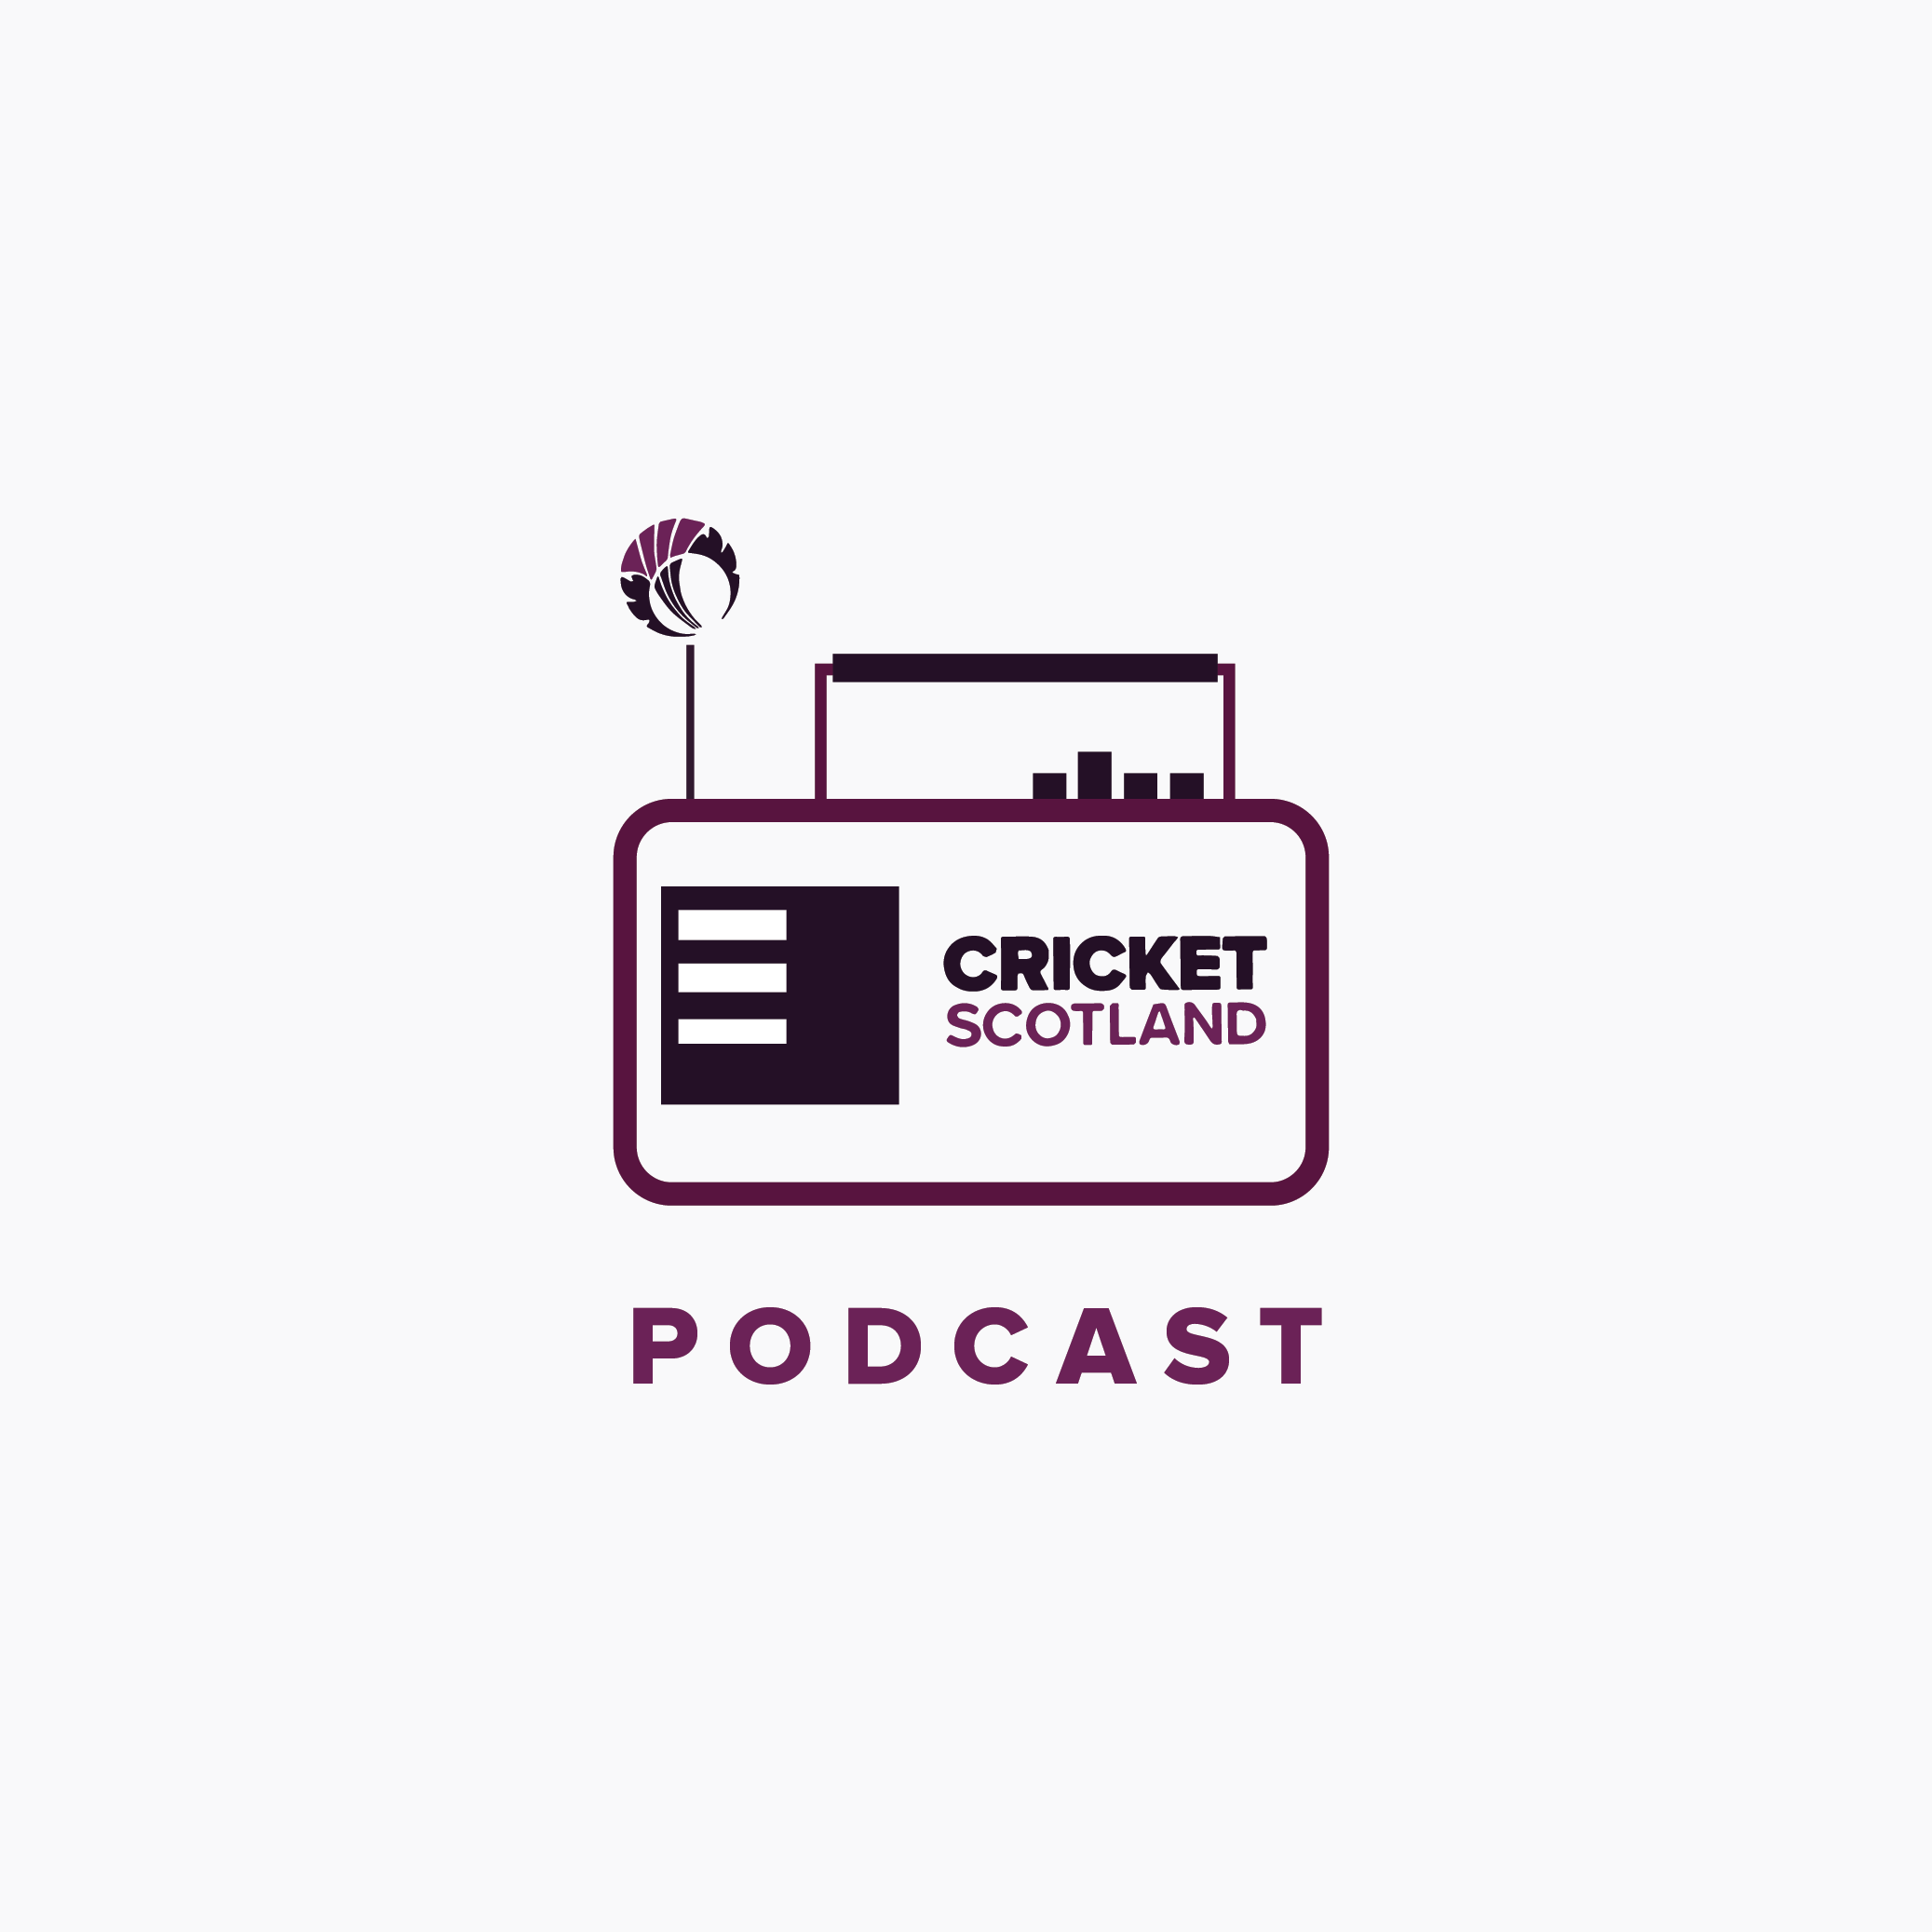 The Cricket Scotland Podcast